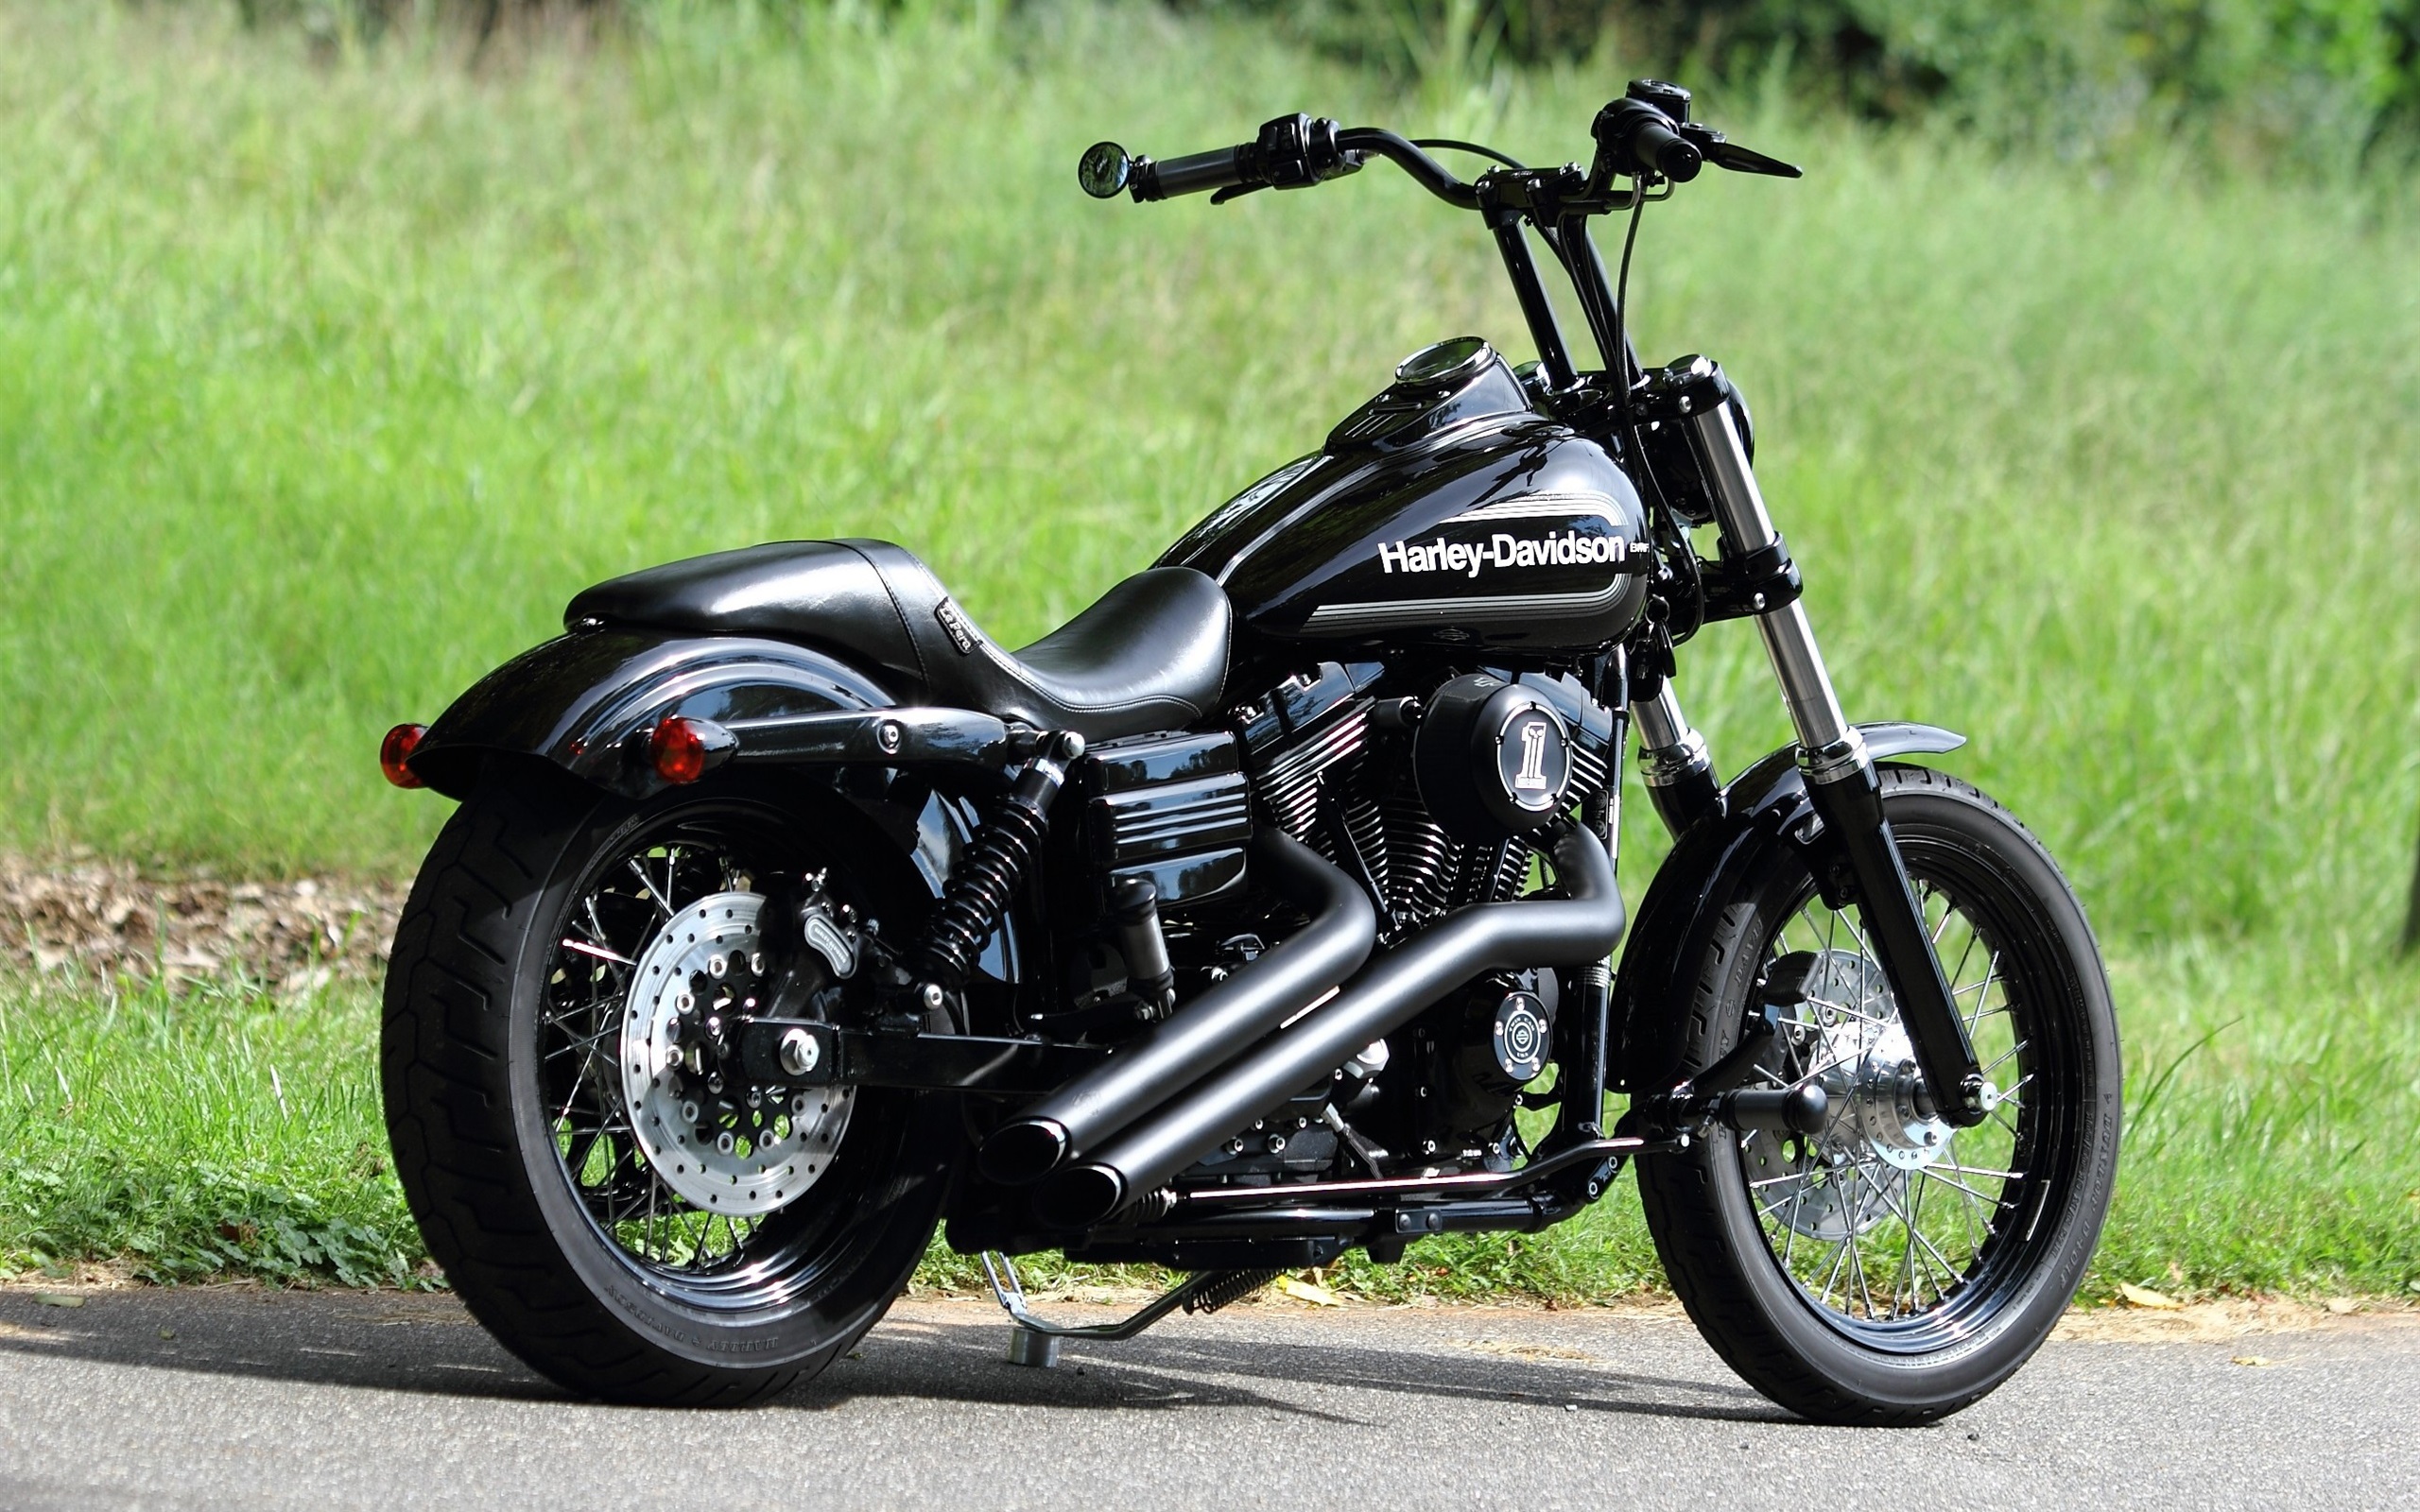 Harley Davidson Chopper Black Motorcycle Wallpaper Bikes And Motorcycles Wallpaper Better